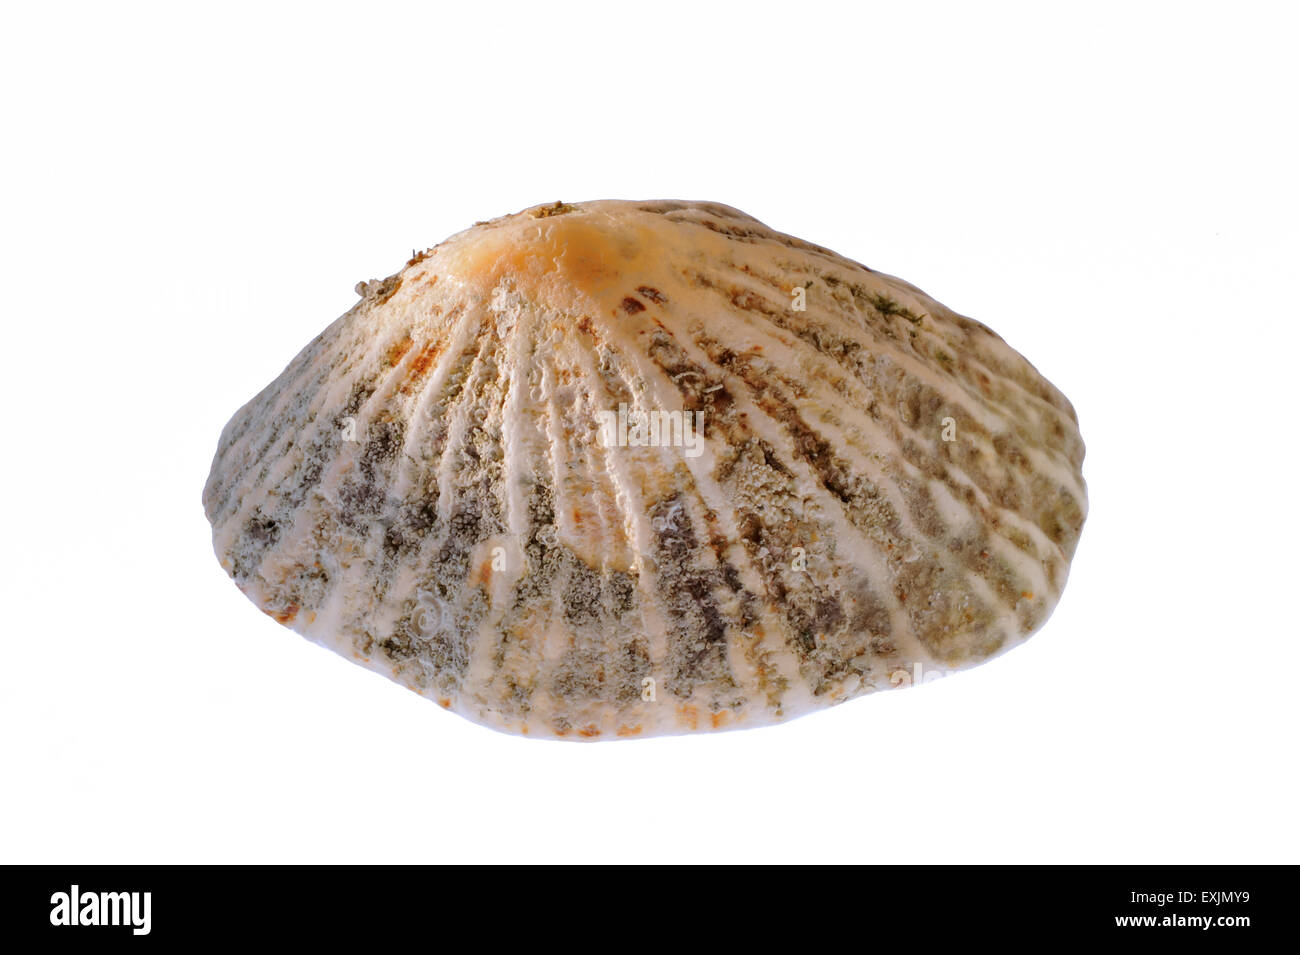 Limpet común / common limpet europeo (Patella vulgata) shell sobre fondo blanco. Foto de stock